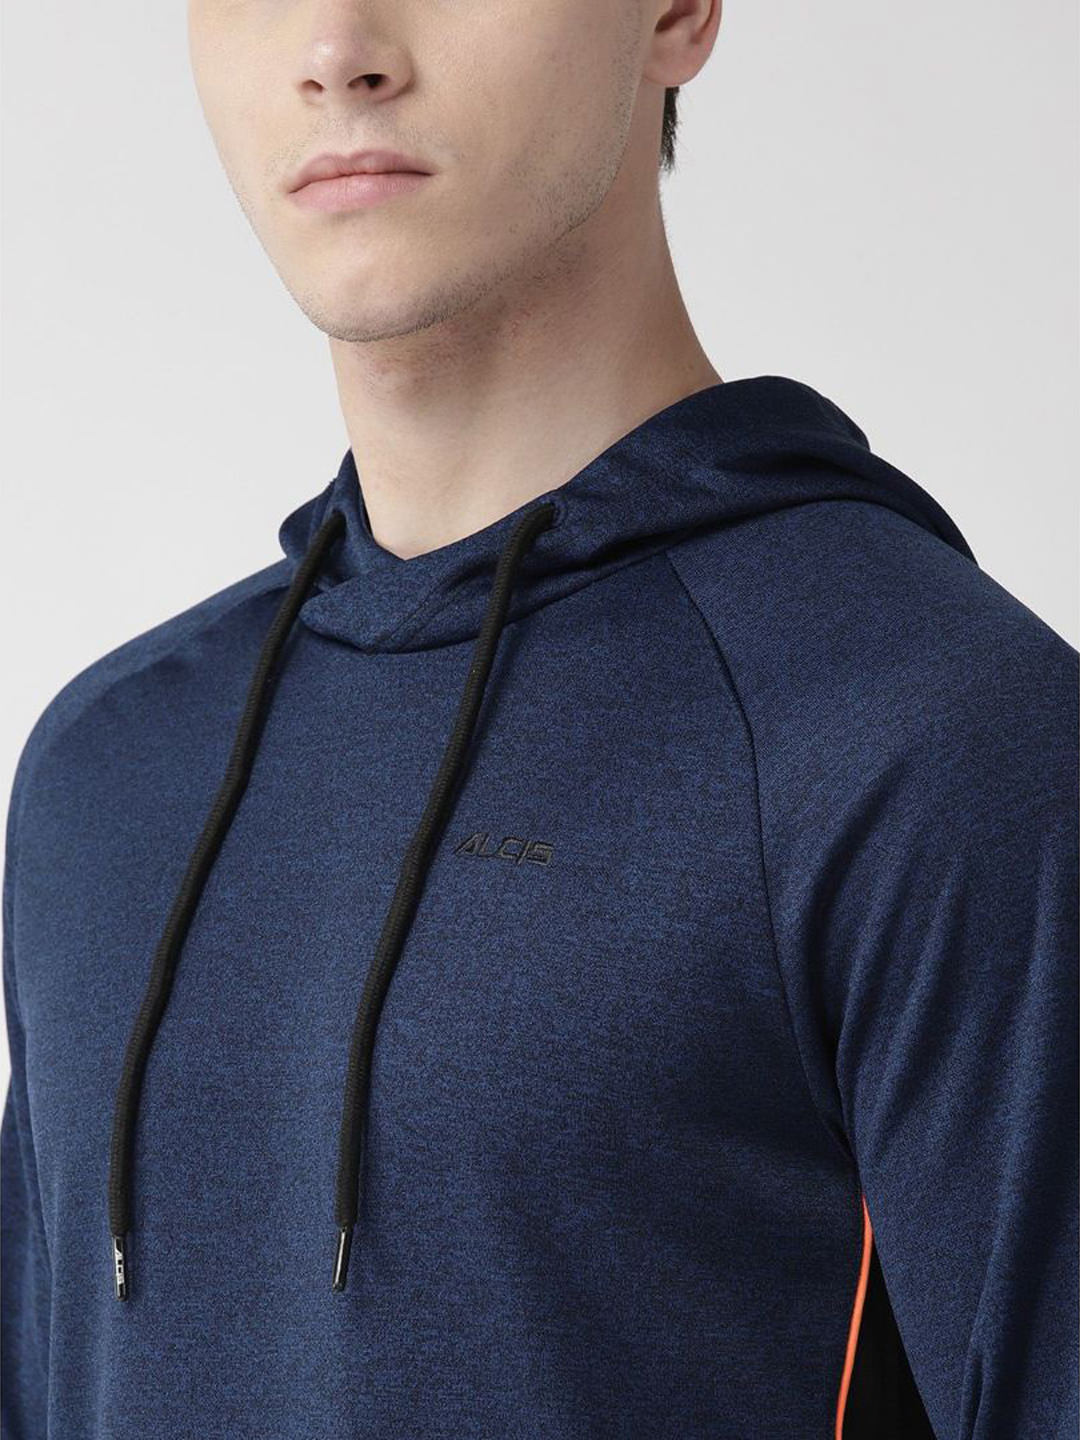 Alcis Men Navy Blue Solid Hooded Sweatshirt